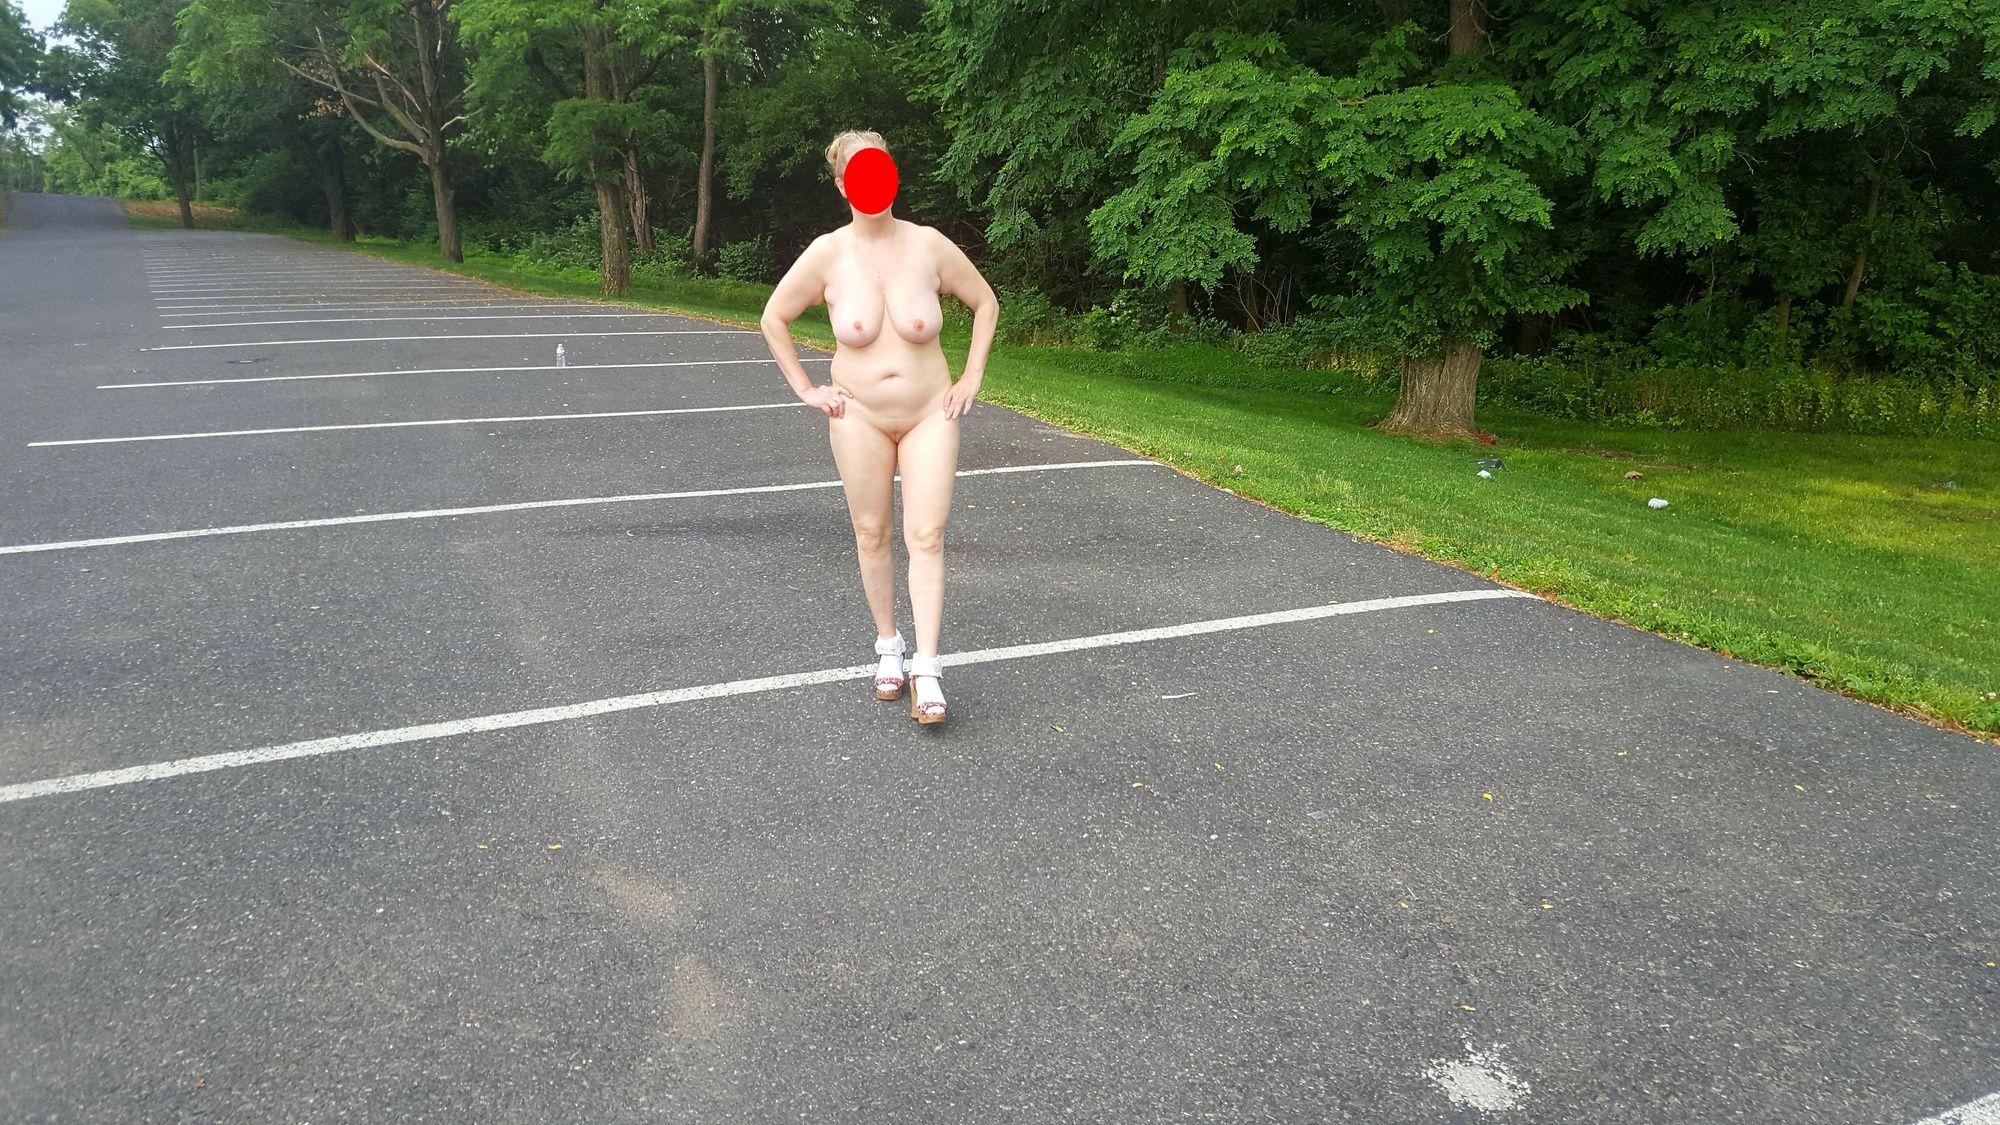 naked parking lot walk #39